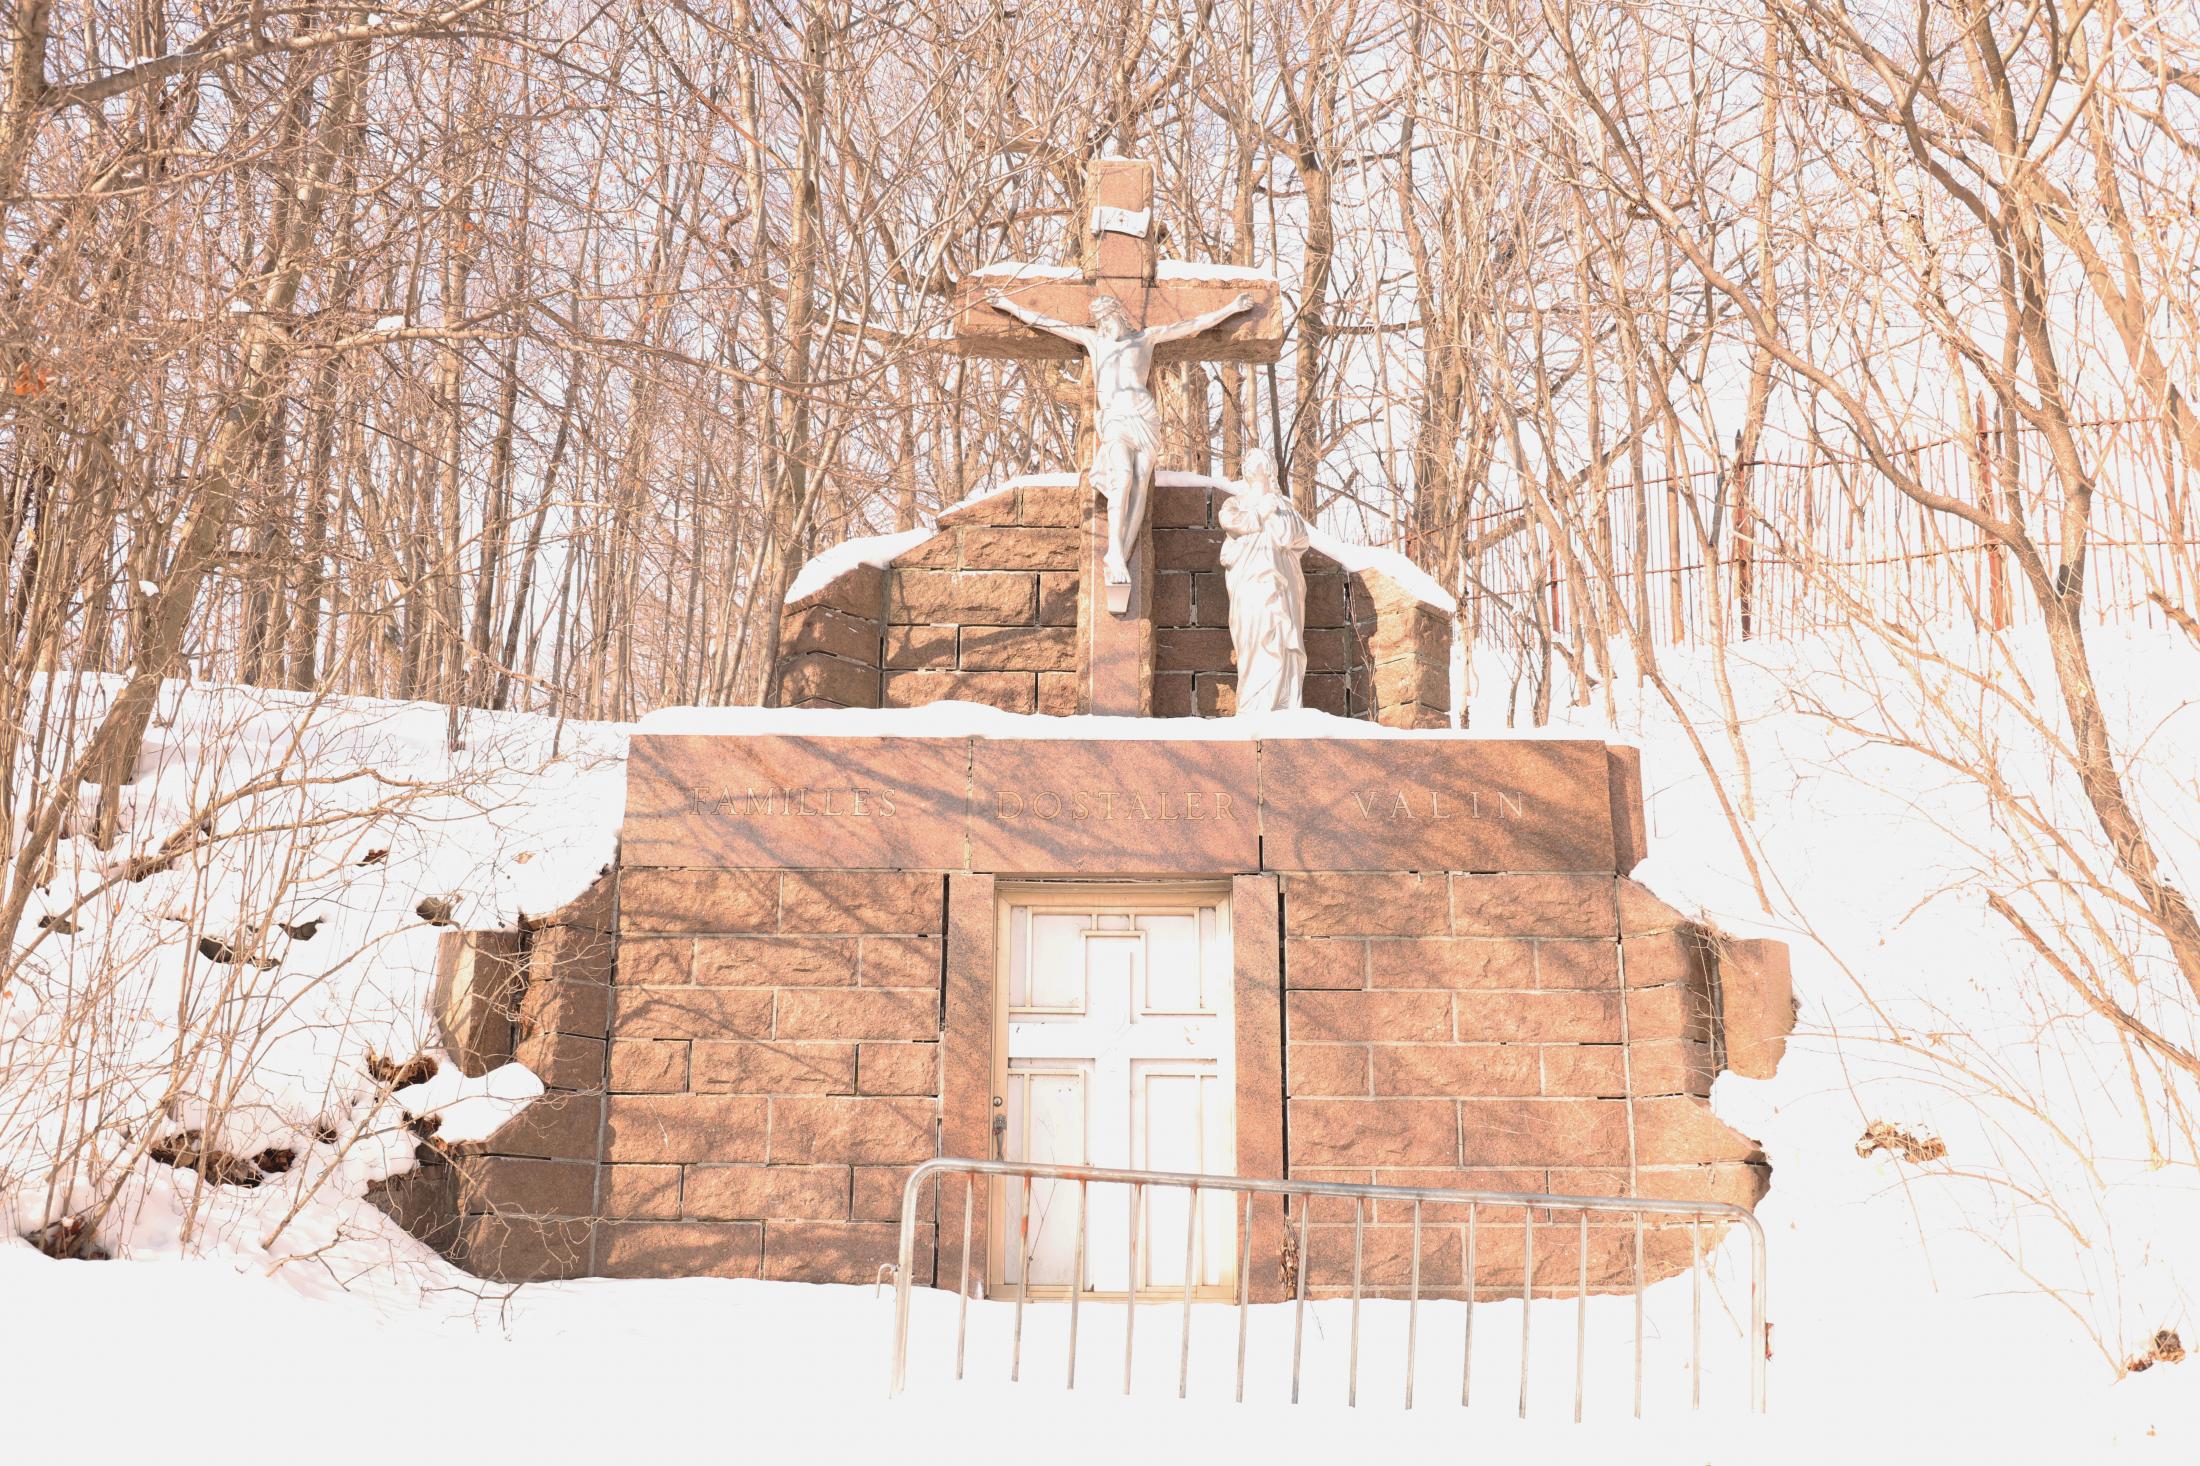 Tombstones  - Montréal, Québec - February 2, 2020: Cross...